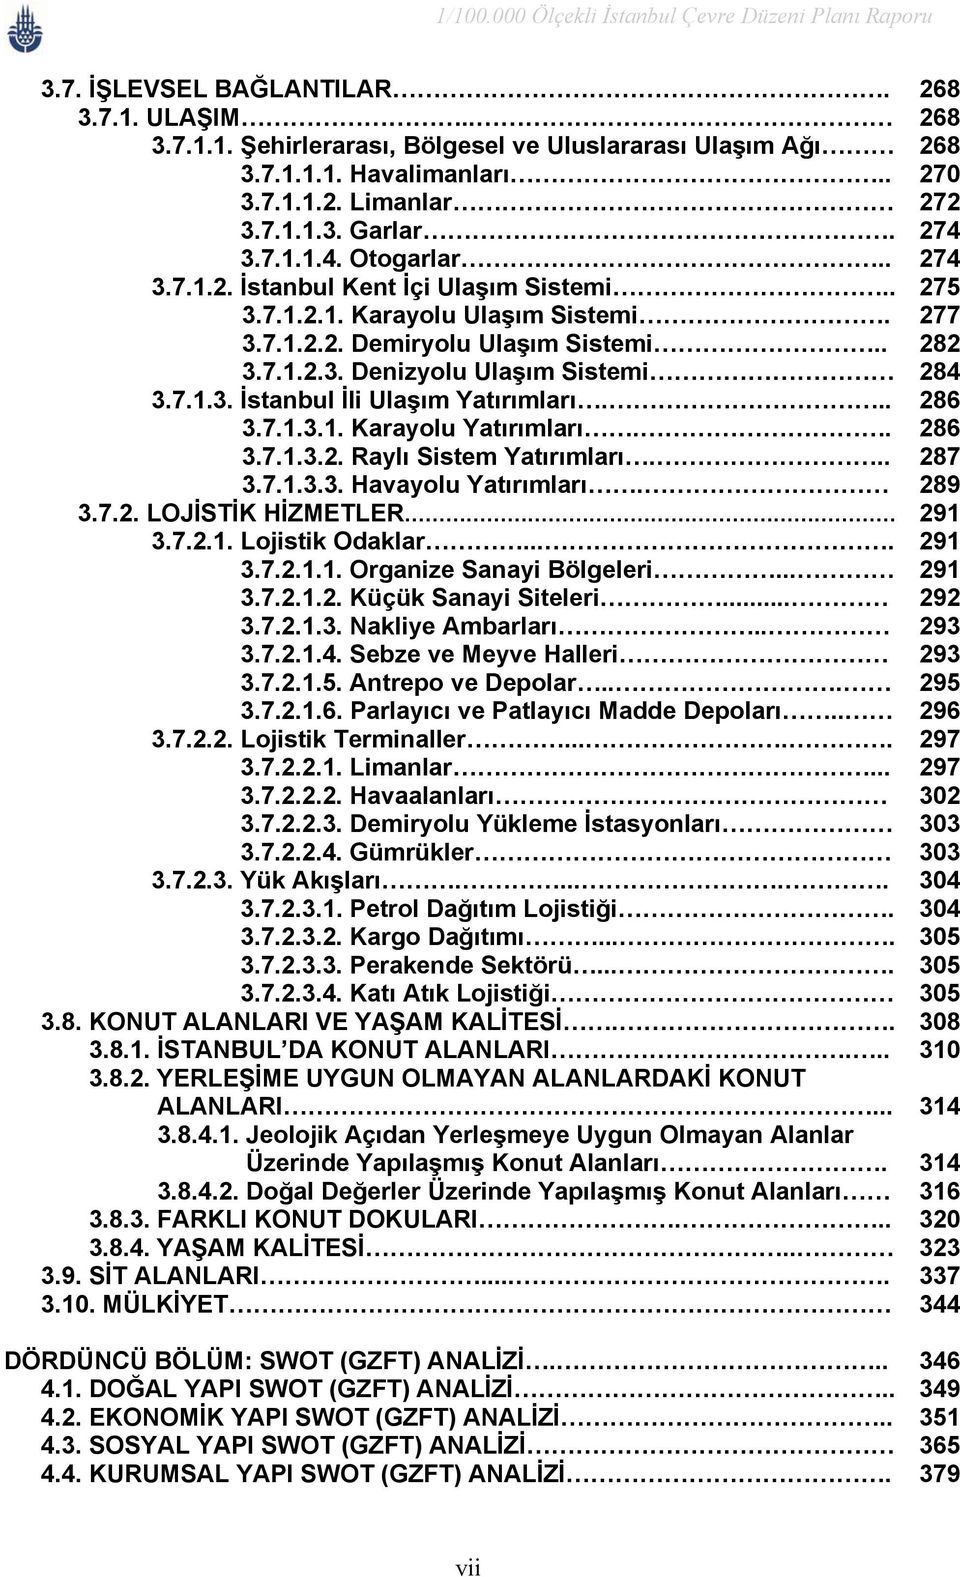 7.1.3. İstanbul İli Ulaşım Yatırımları... 286 3.7.1.3.1. Karayolu Yatırımları.. 286 3.7.1.3.2. Raylı Sistem Yatırımları... 287 3.7.1.3.3. Havayolu Yatırımları. 289 3.7.2. LOJİSTİK HİZMETLER 291 3.7.2.1. Lojistik Odaklar.